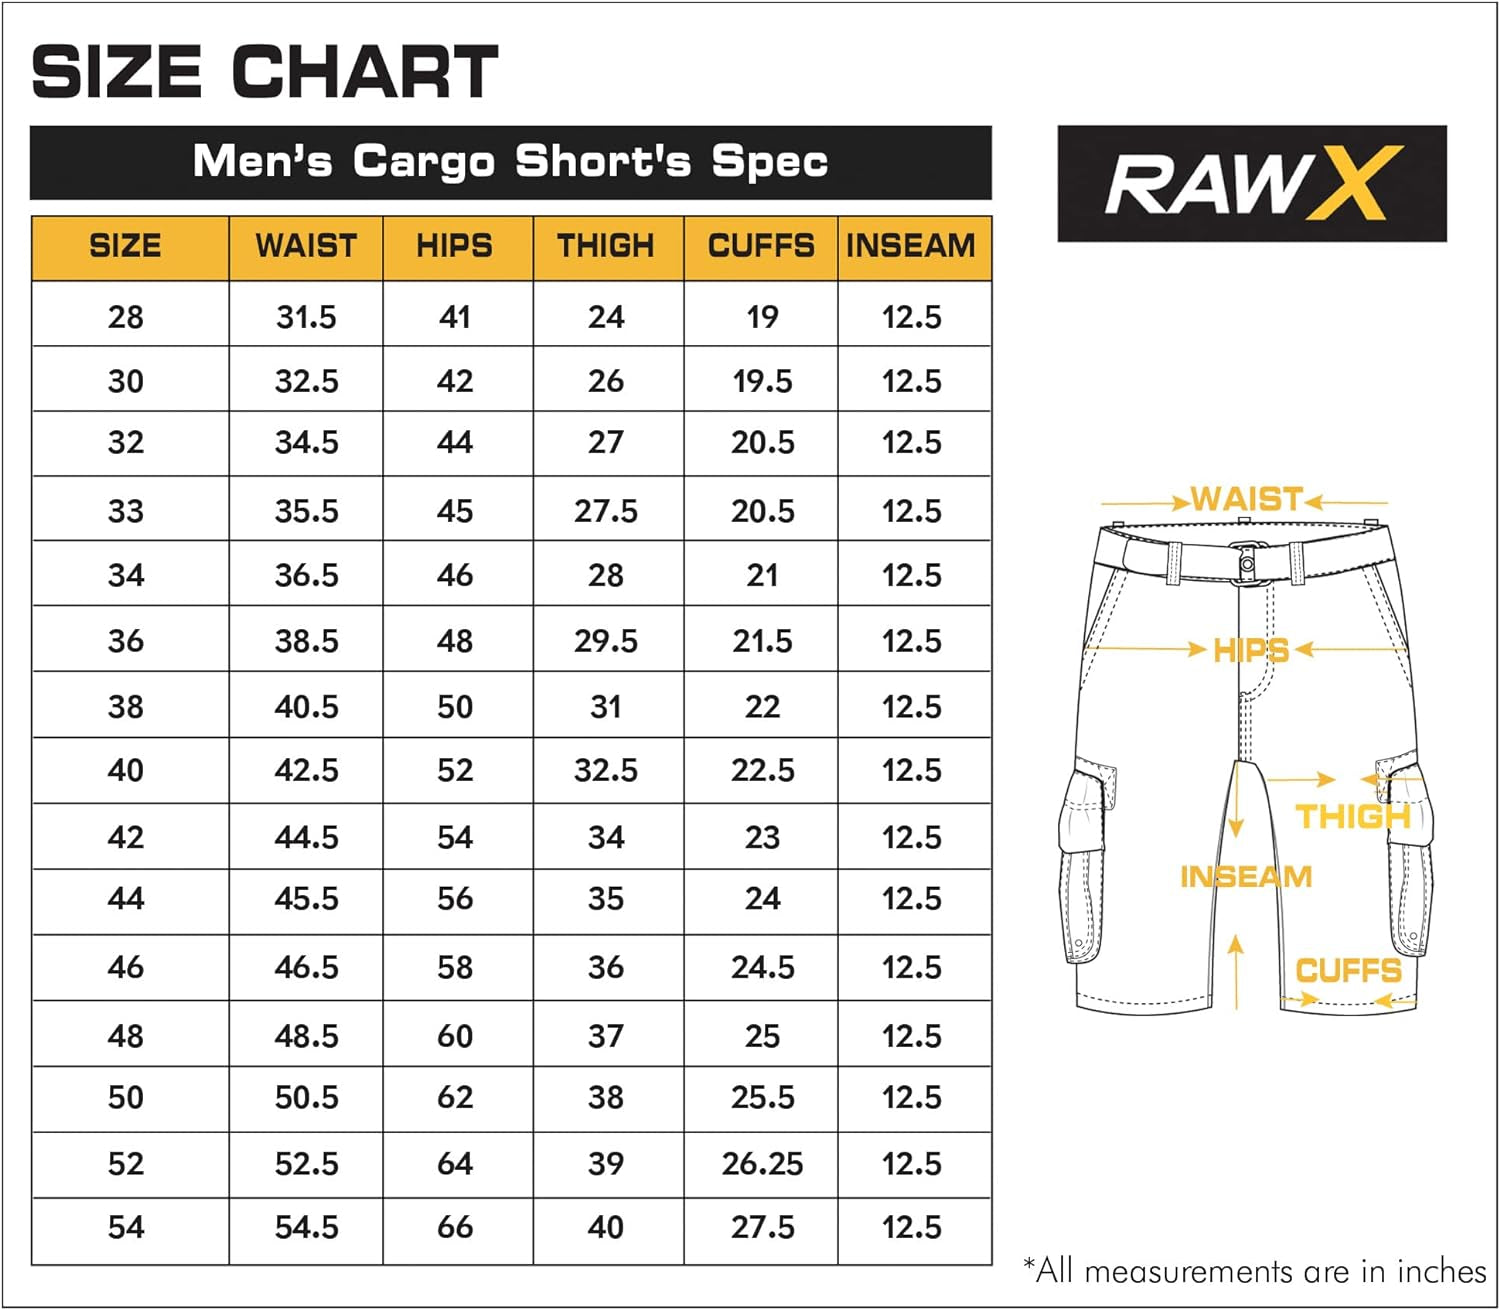 RAWX cargo shorts